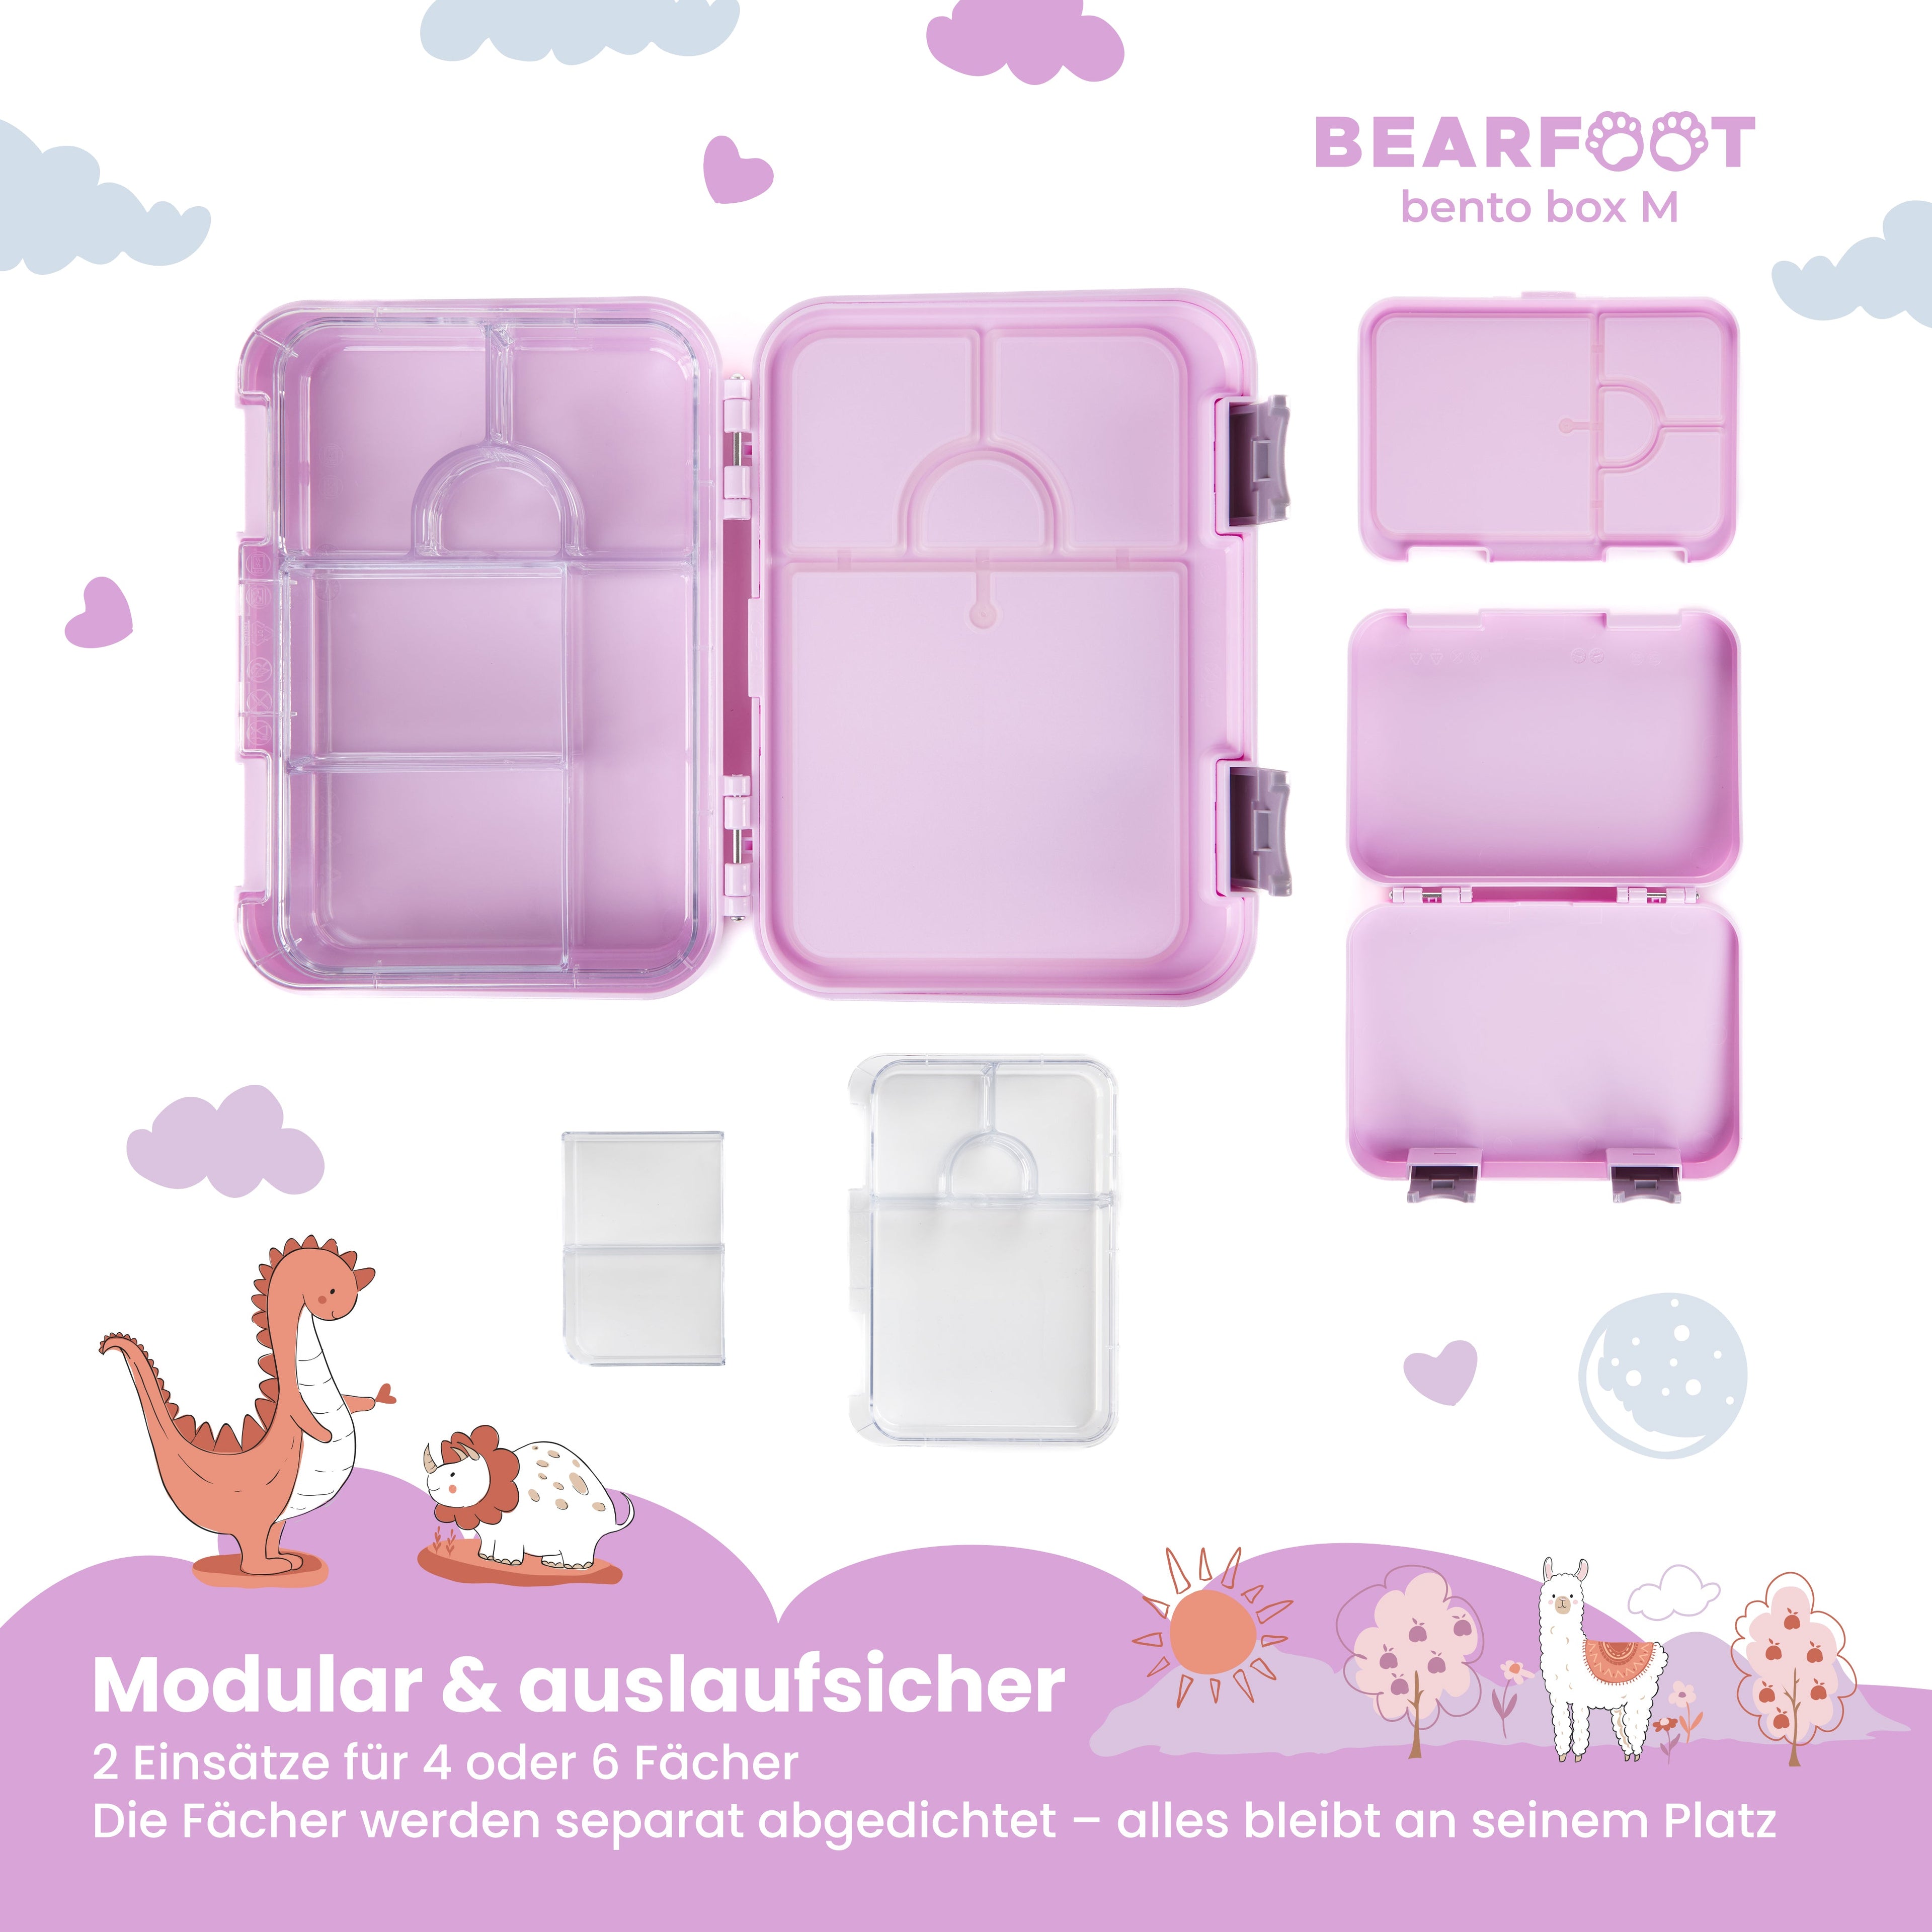 Fiambrera para niños con compartimentos, lonchera, caja bento - unicornio morado